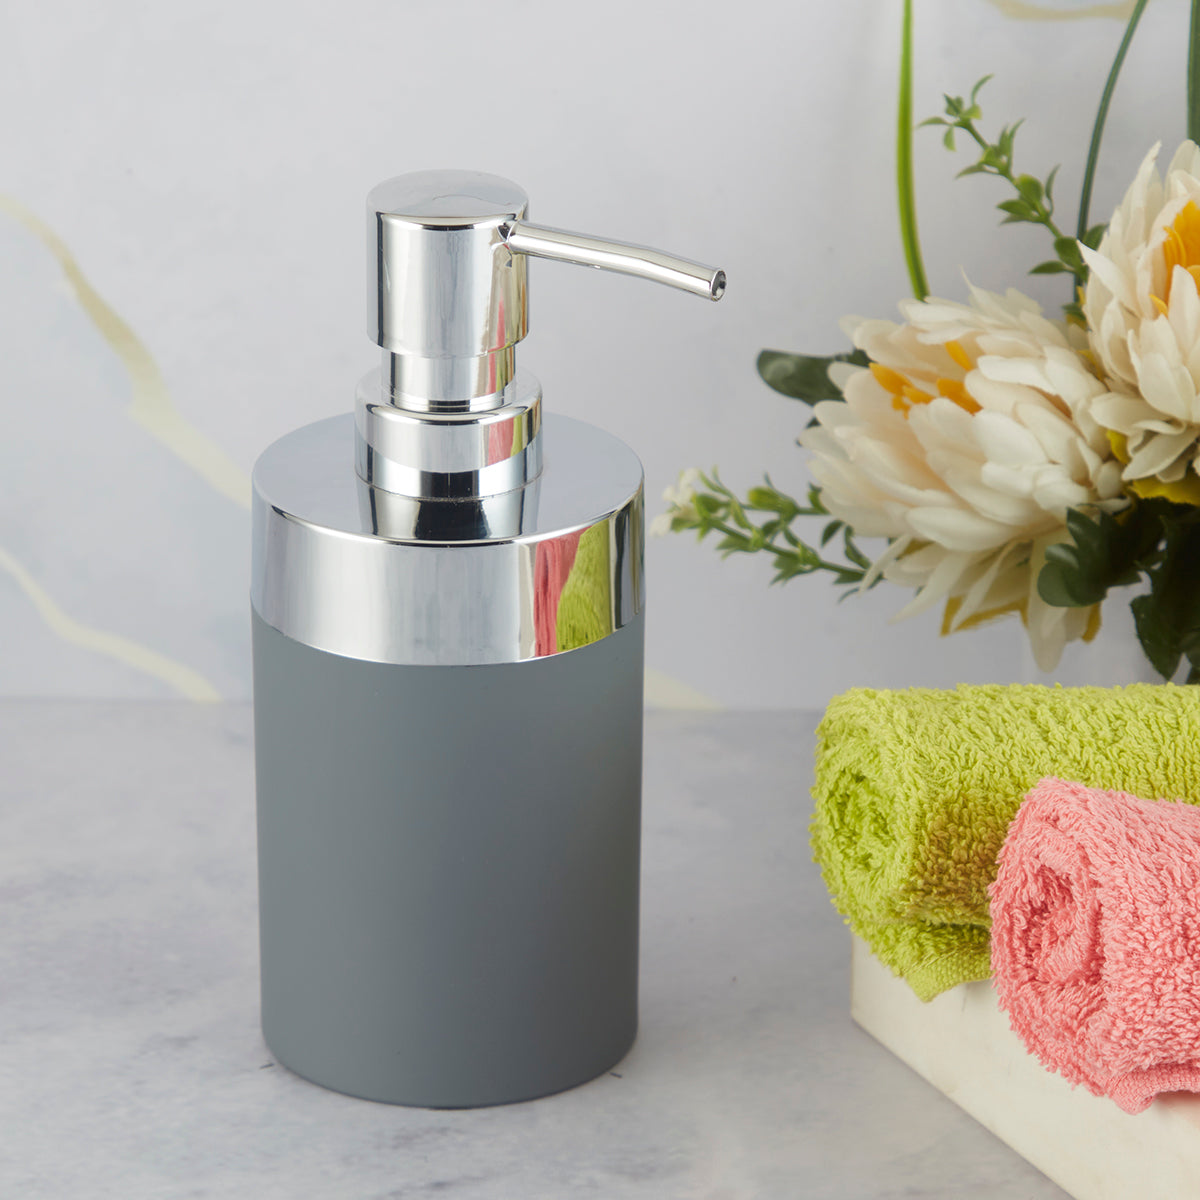 Acrylic Soap Dispenser Pump for Bathroom (9956)